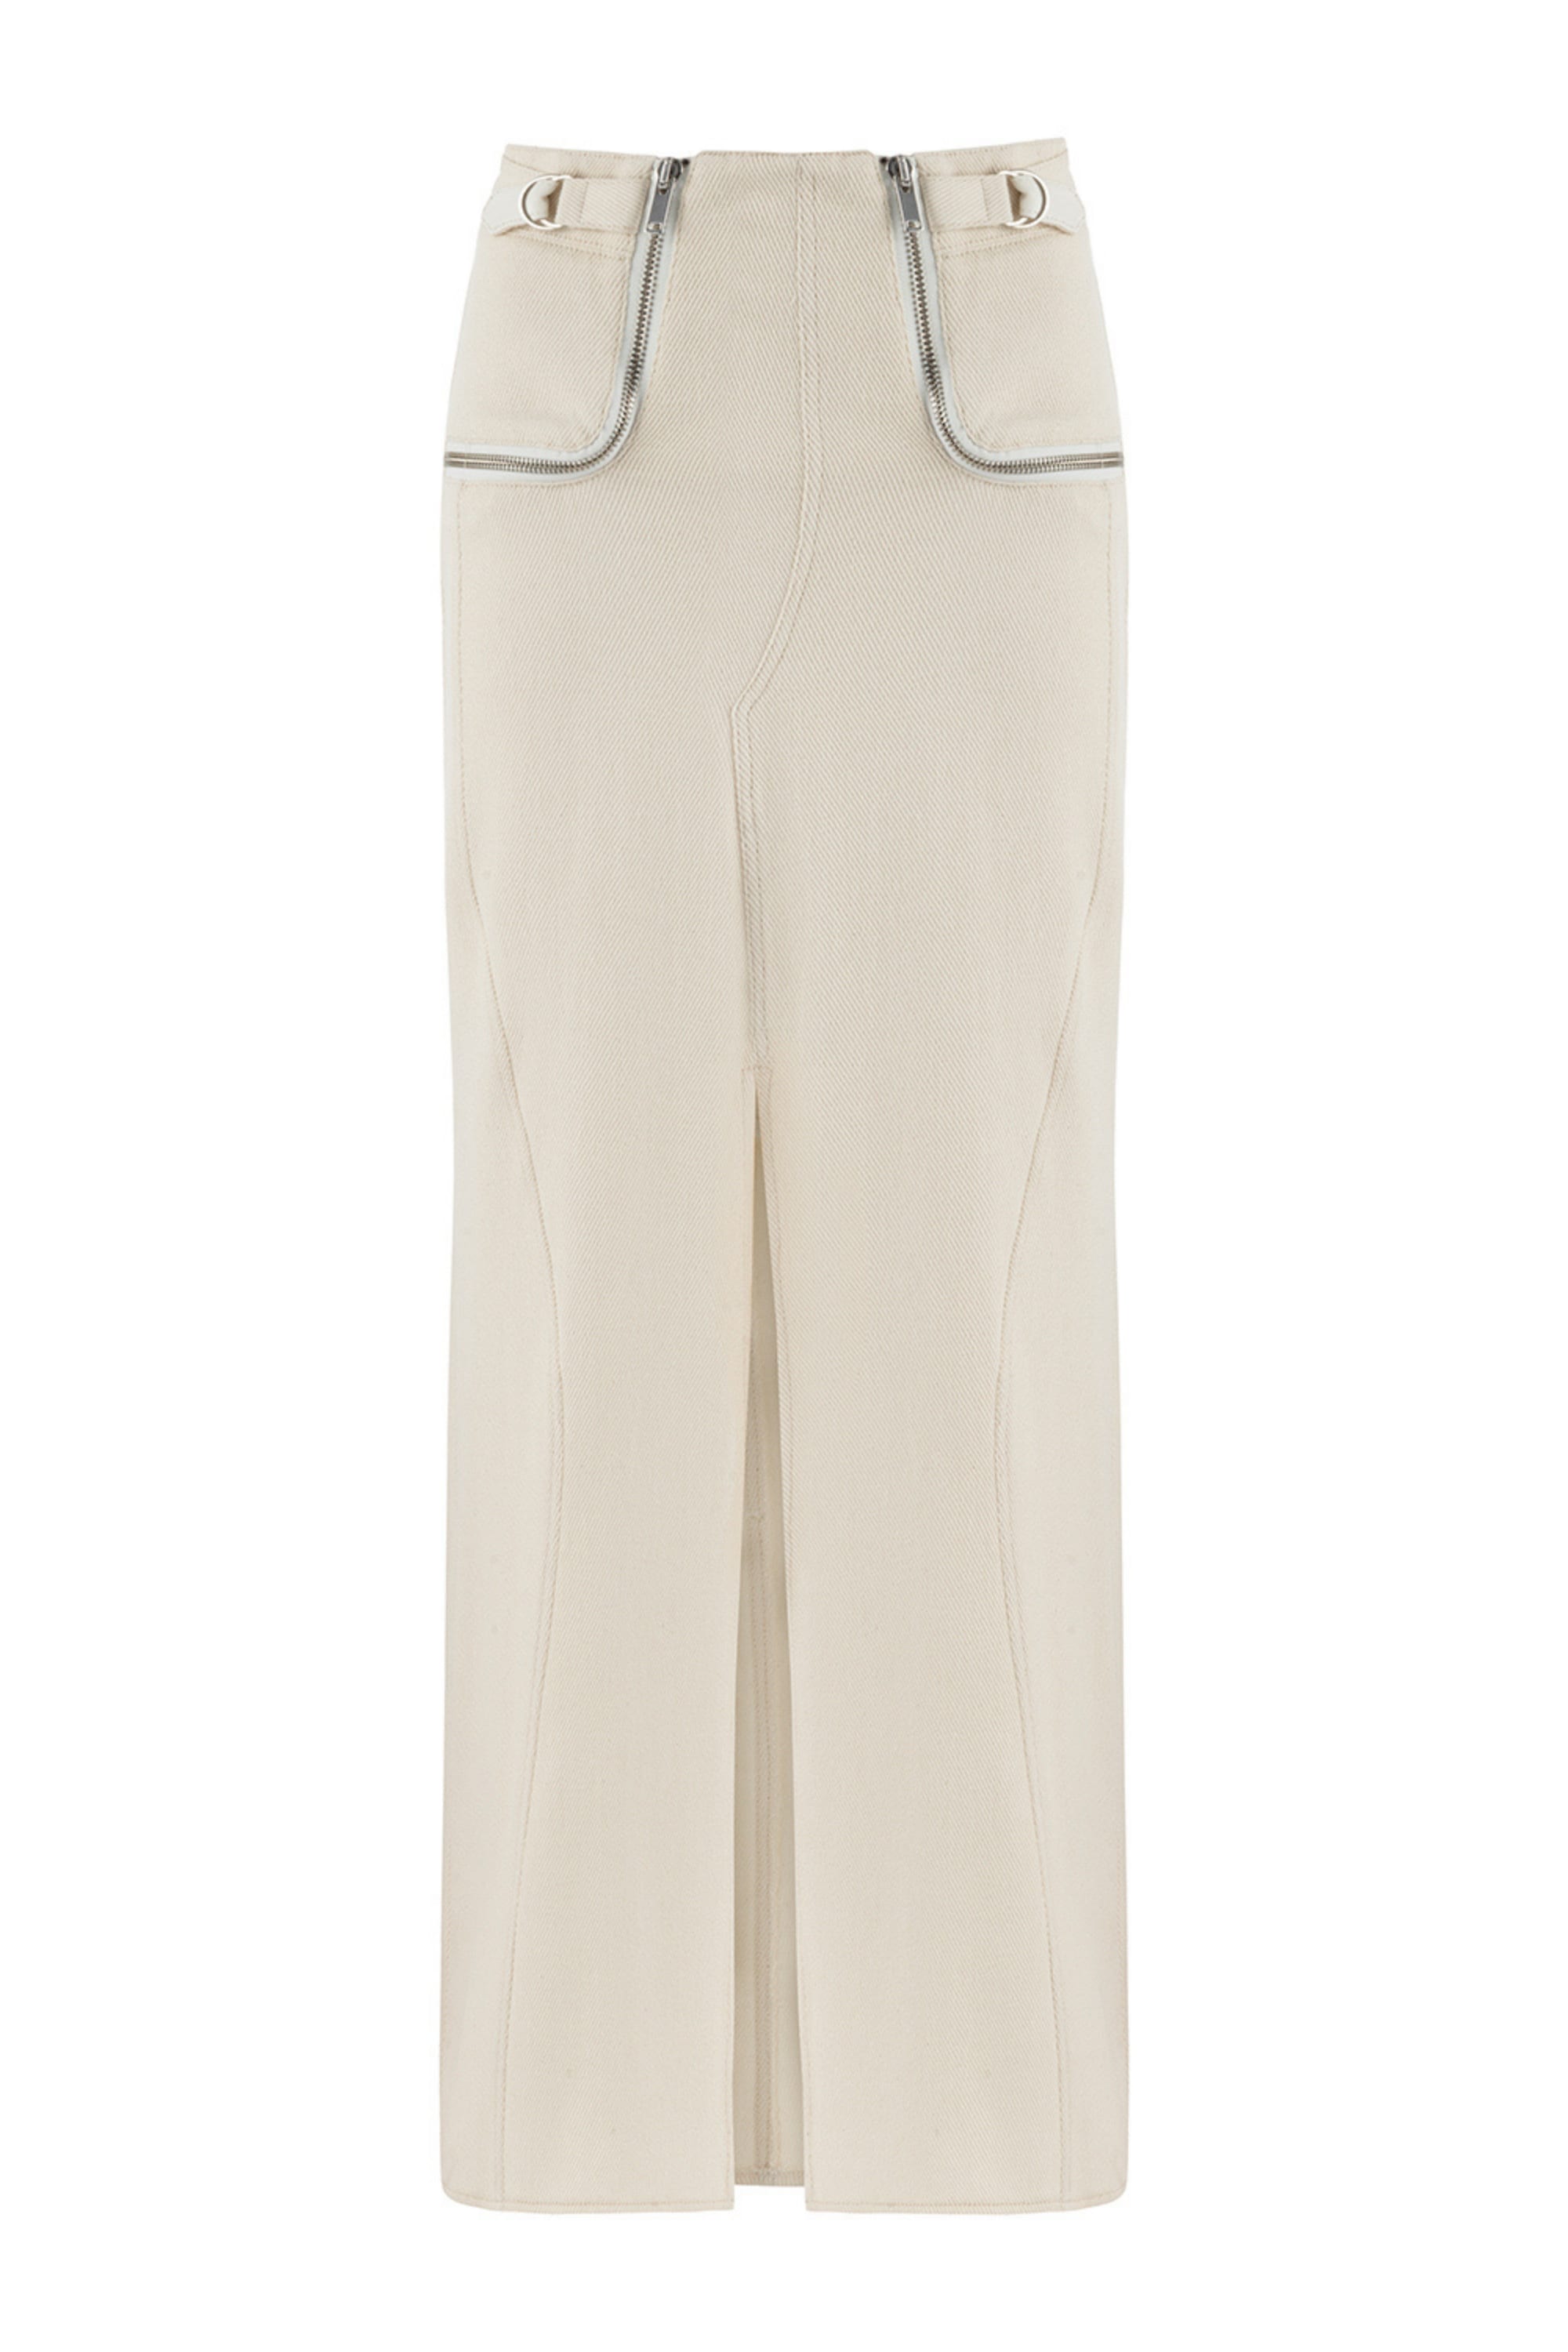 Nocturne Women's Long Skirt With Zipper Detail-white